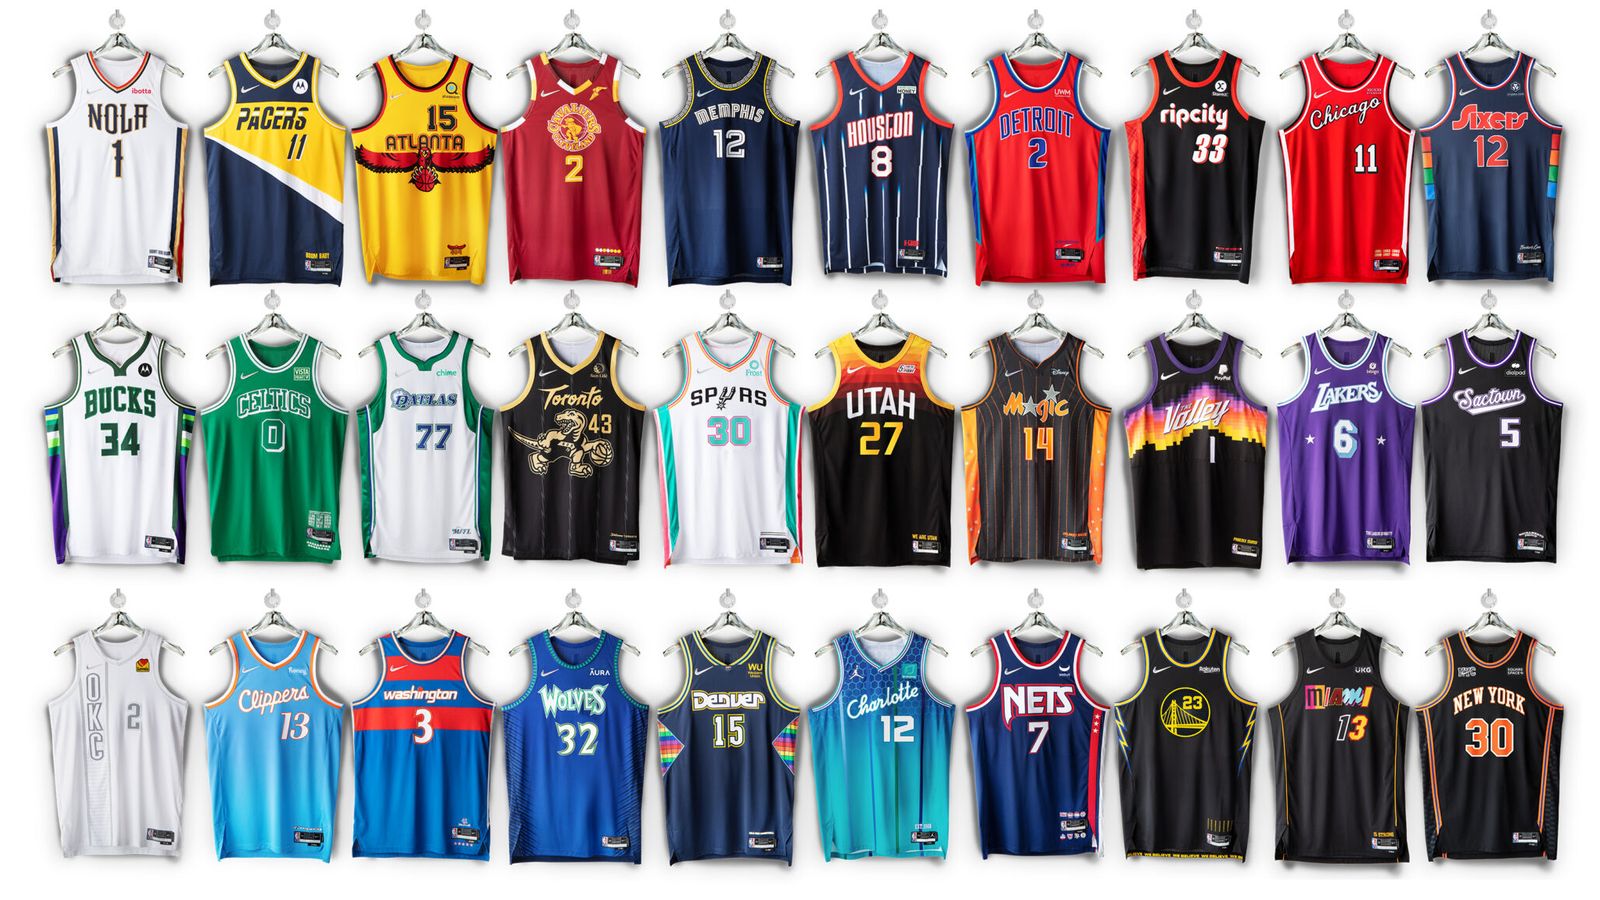 2013 nba jersey sales